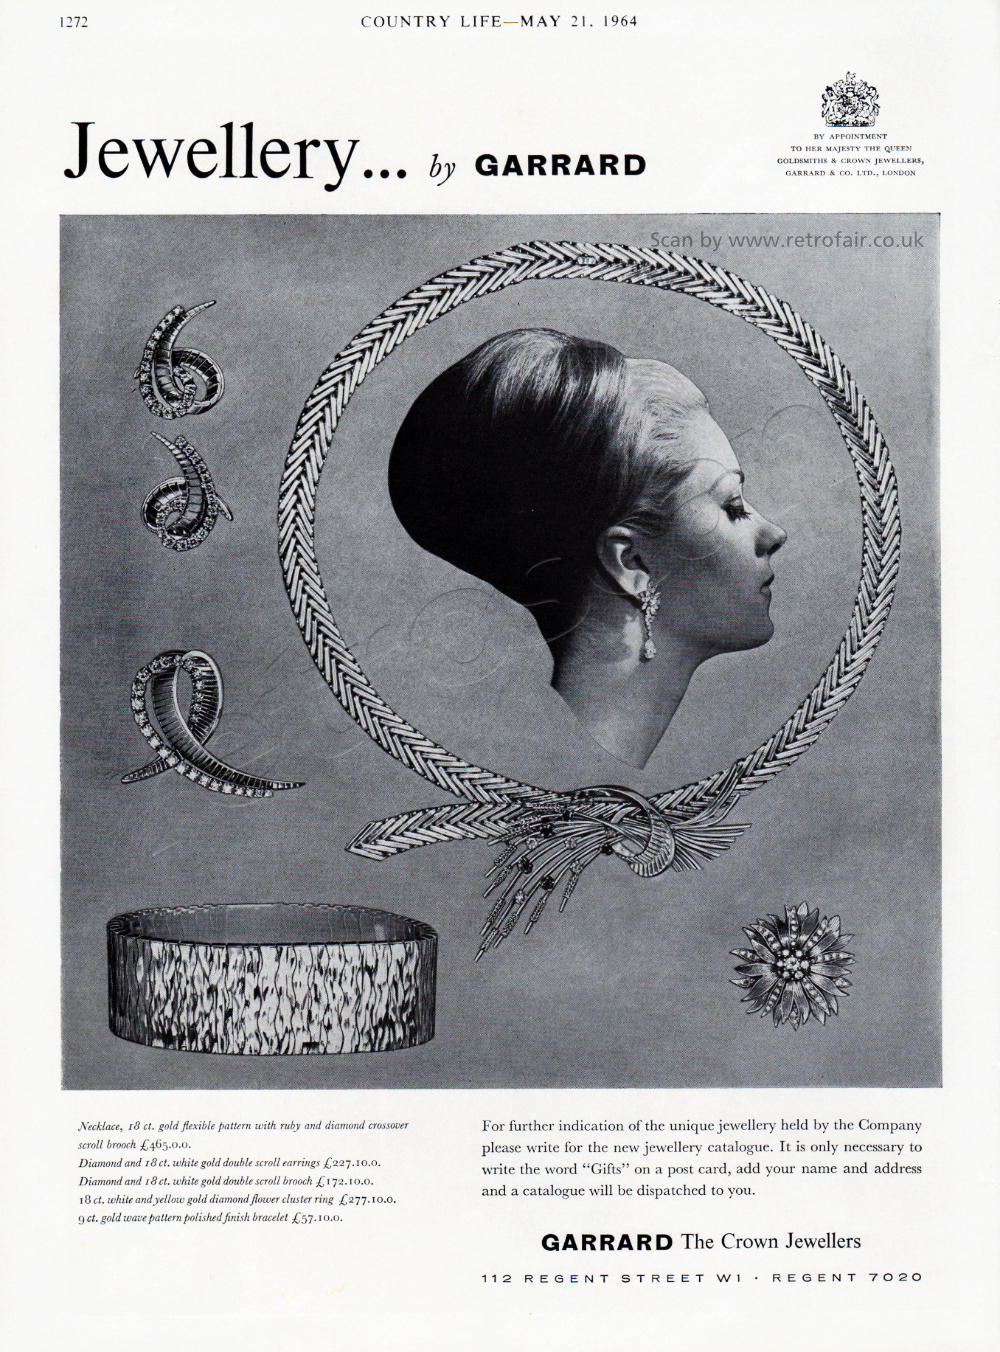 1964 Garrad Jewellery ad